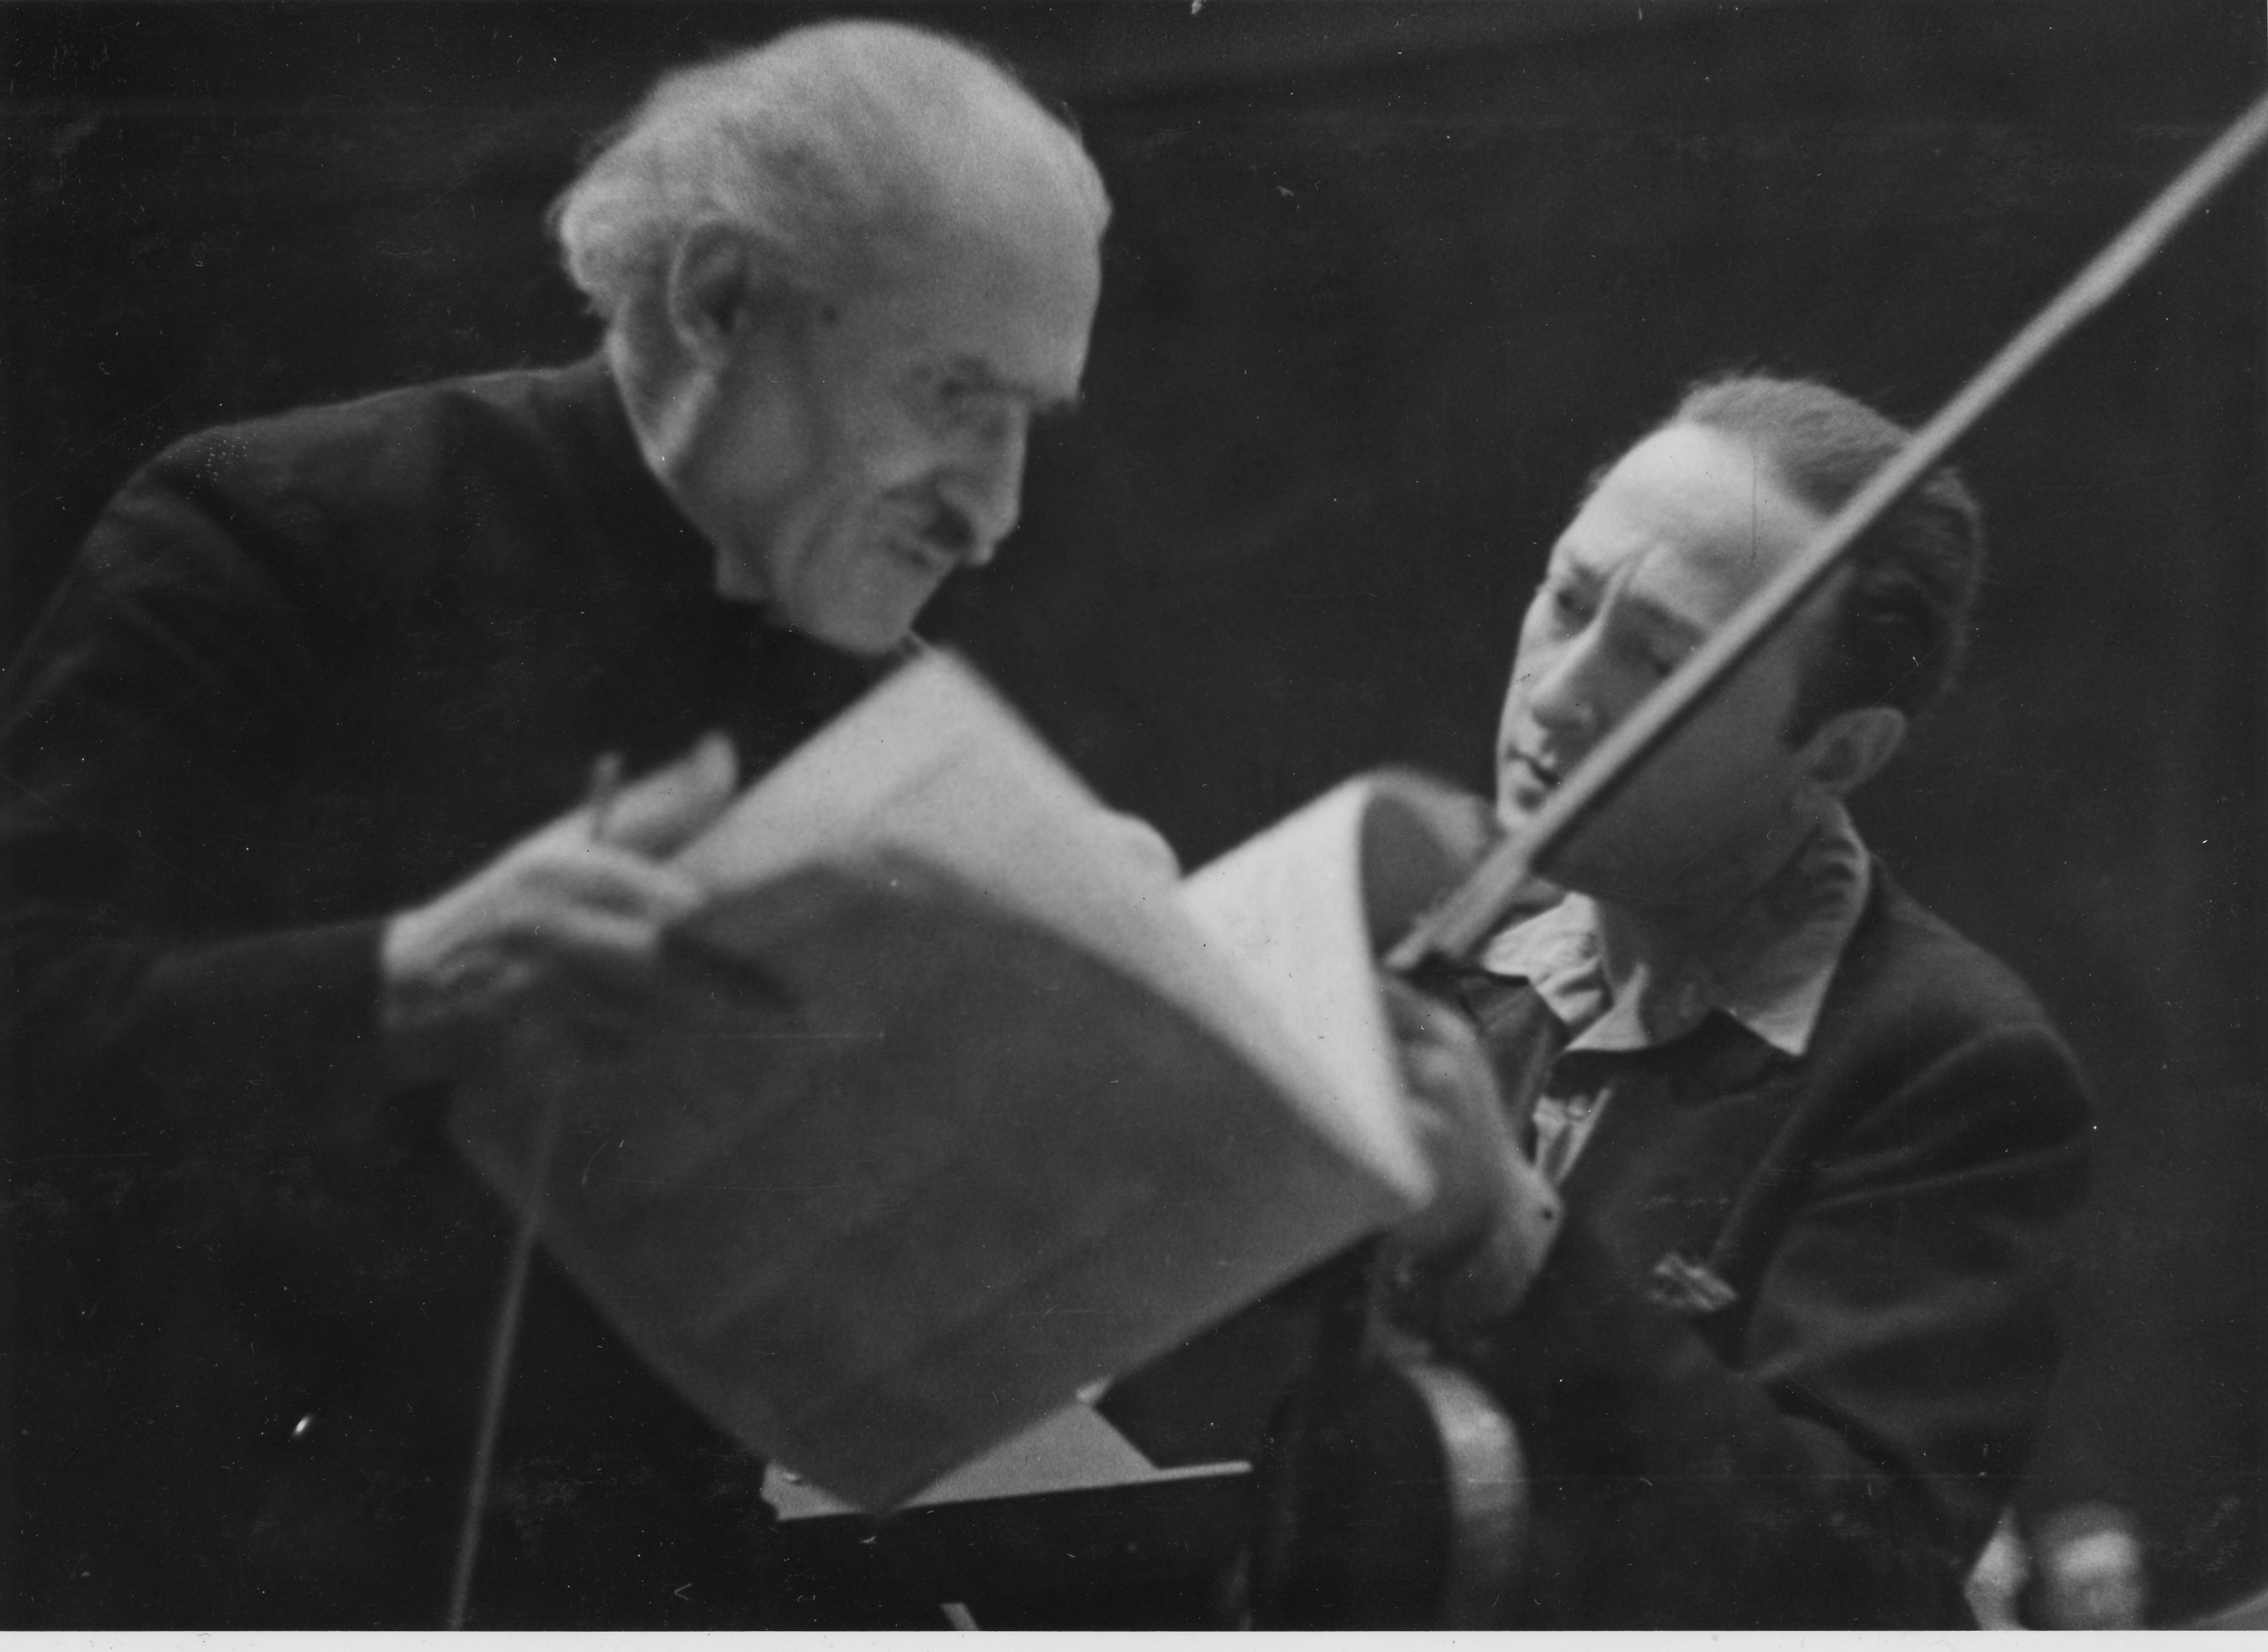 Jascha Heifetz (right) rehearses with Arturo Toscanini (left), circa 1950. Credit: Library of Congress